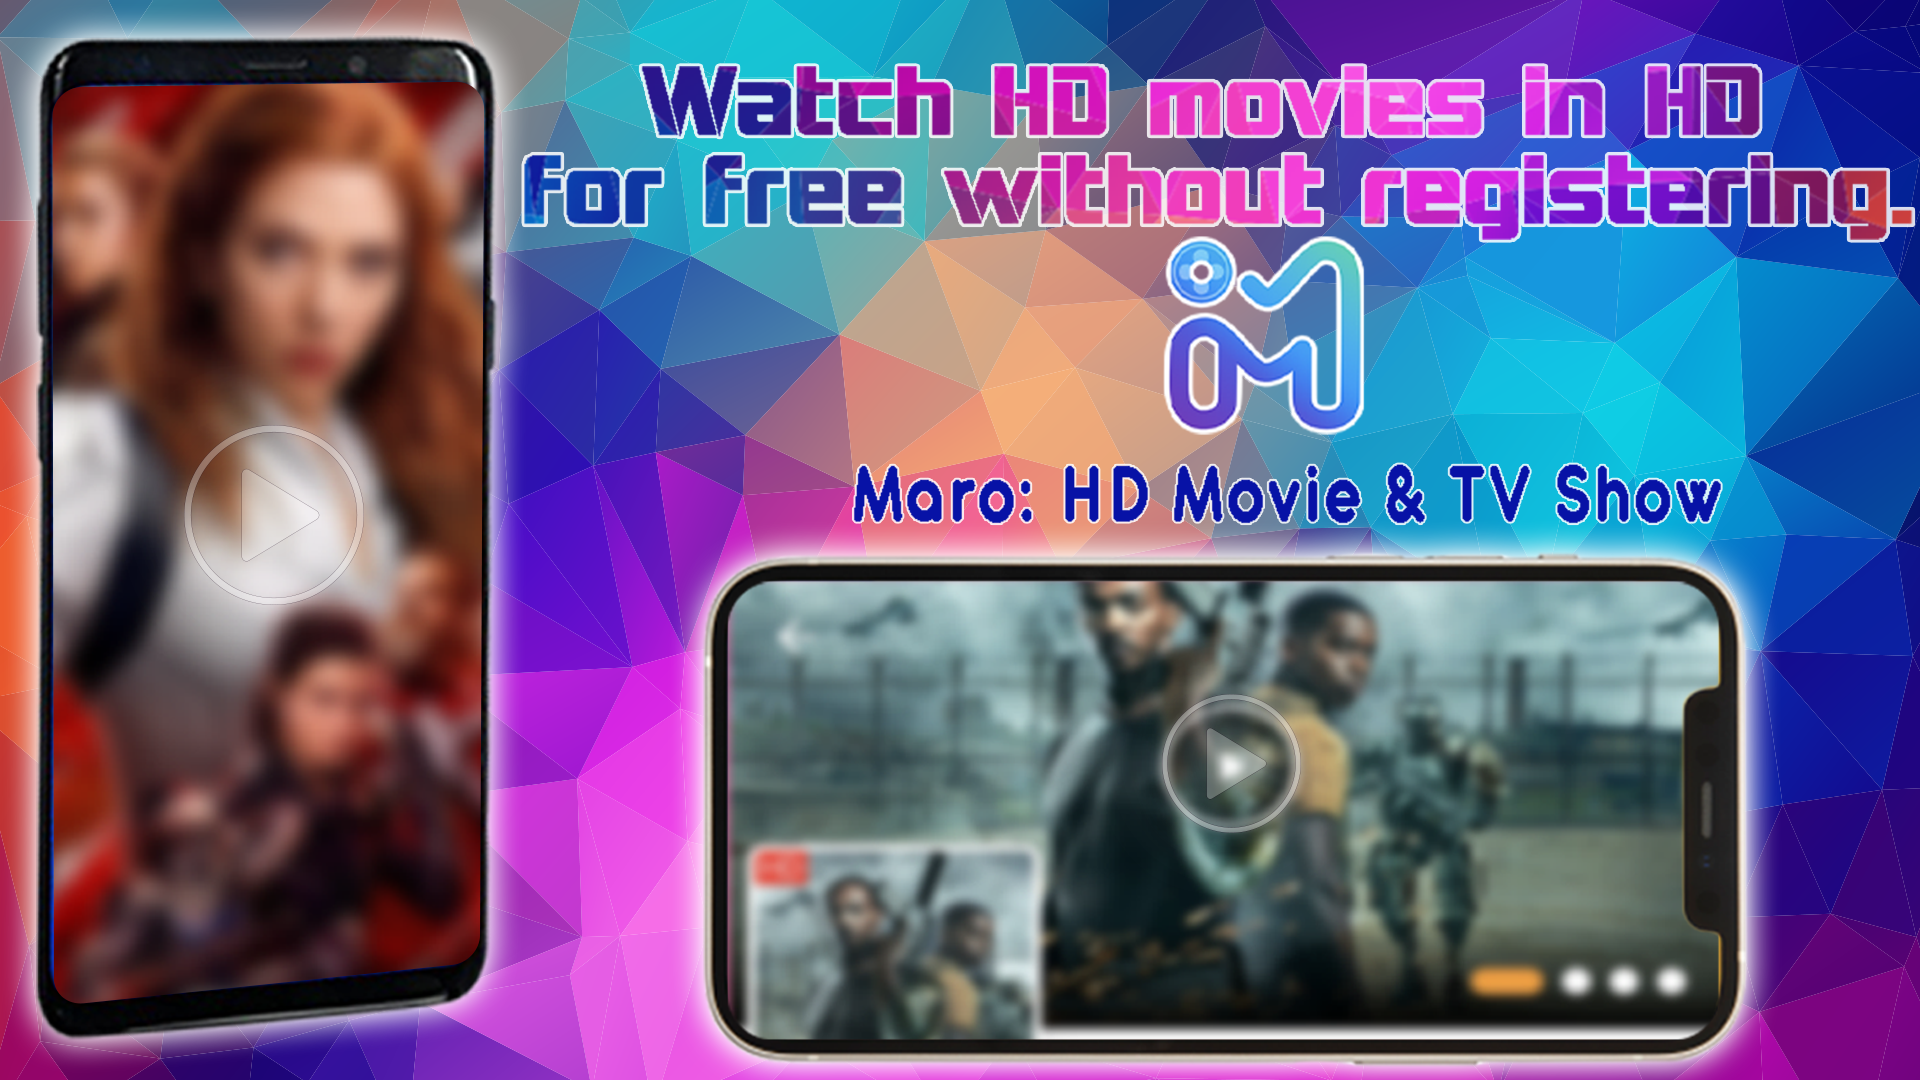 Free show: Free to Play - The Movie, Movies